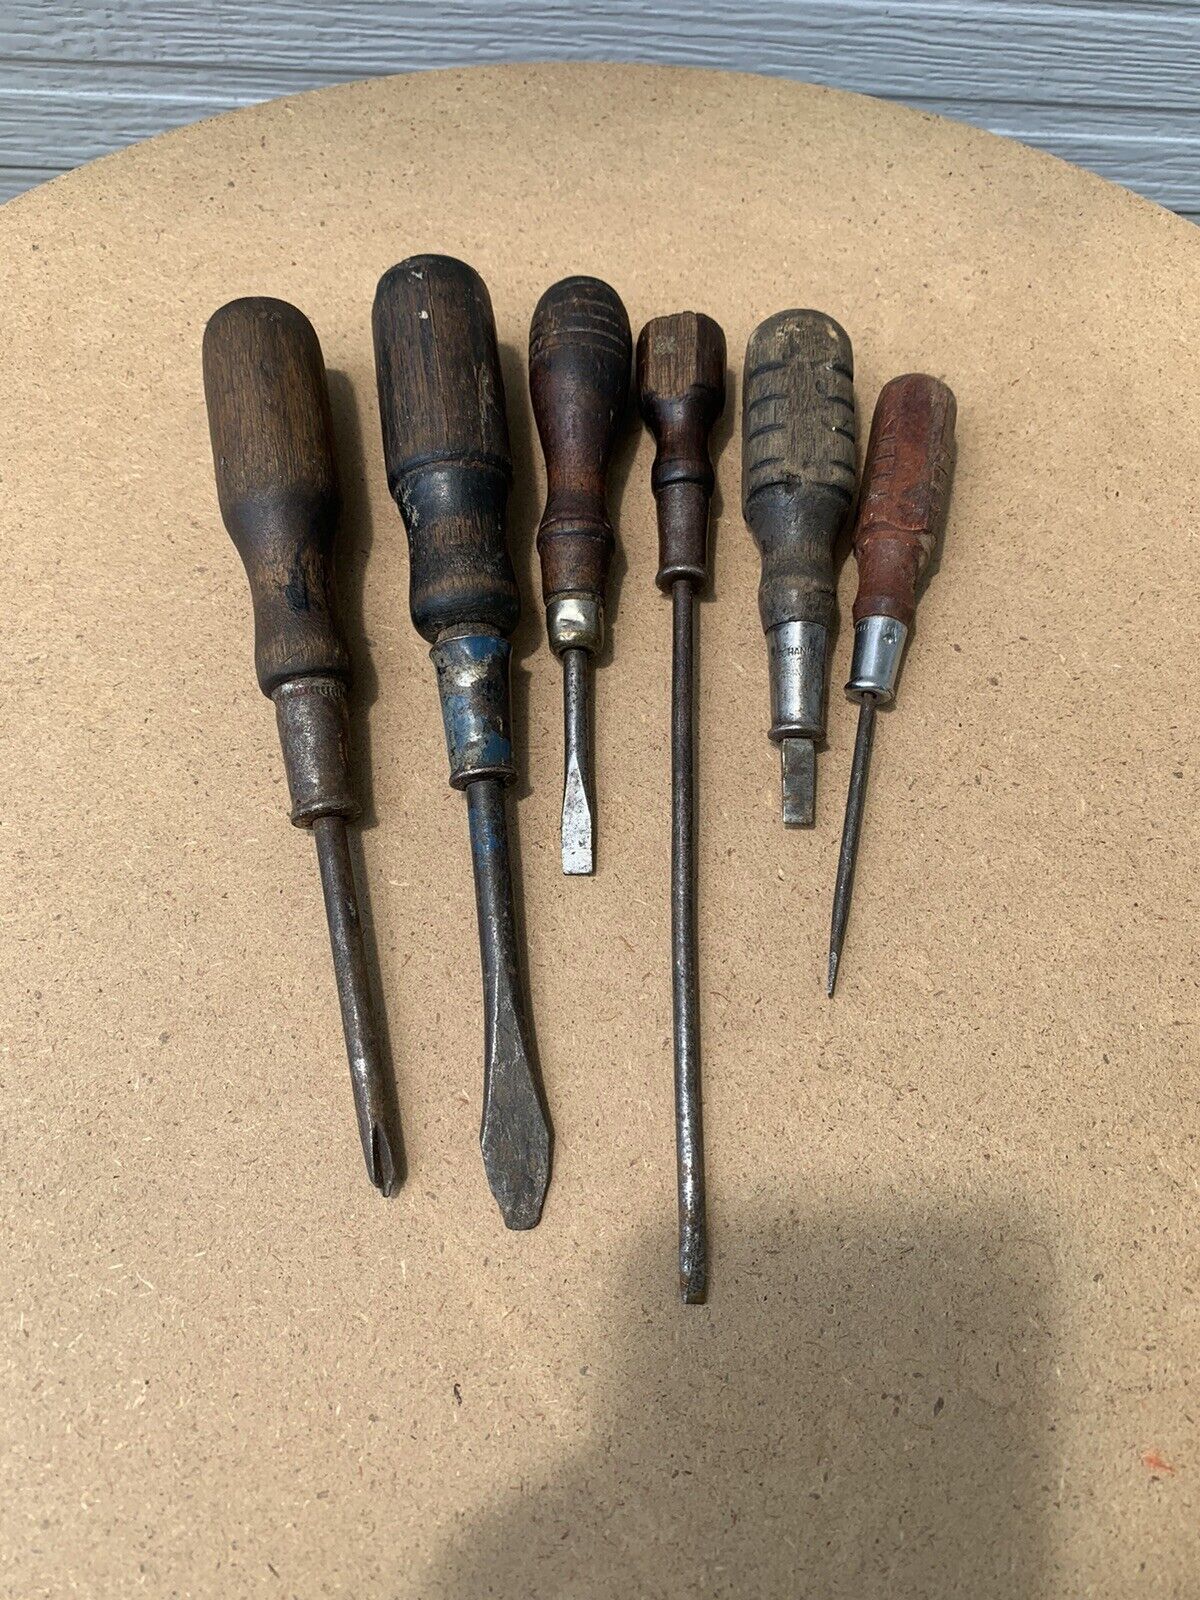 Vintage Wooden Handle Screwdrivers - Lot Of 6